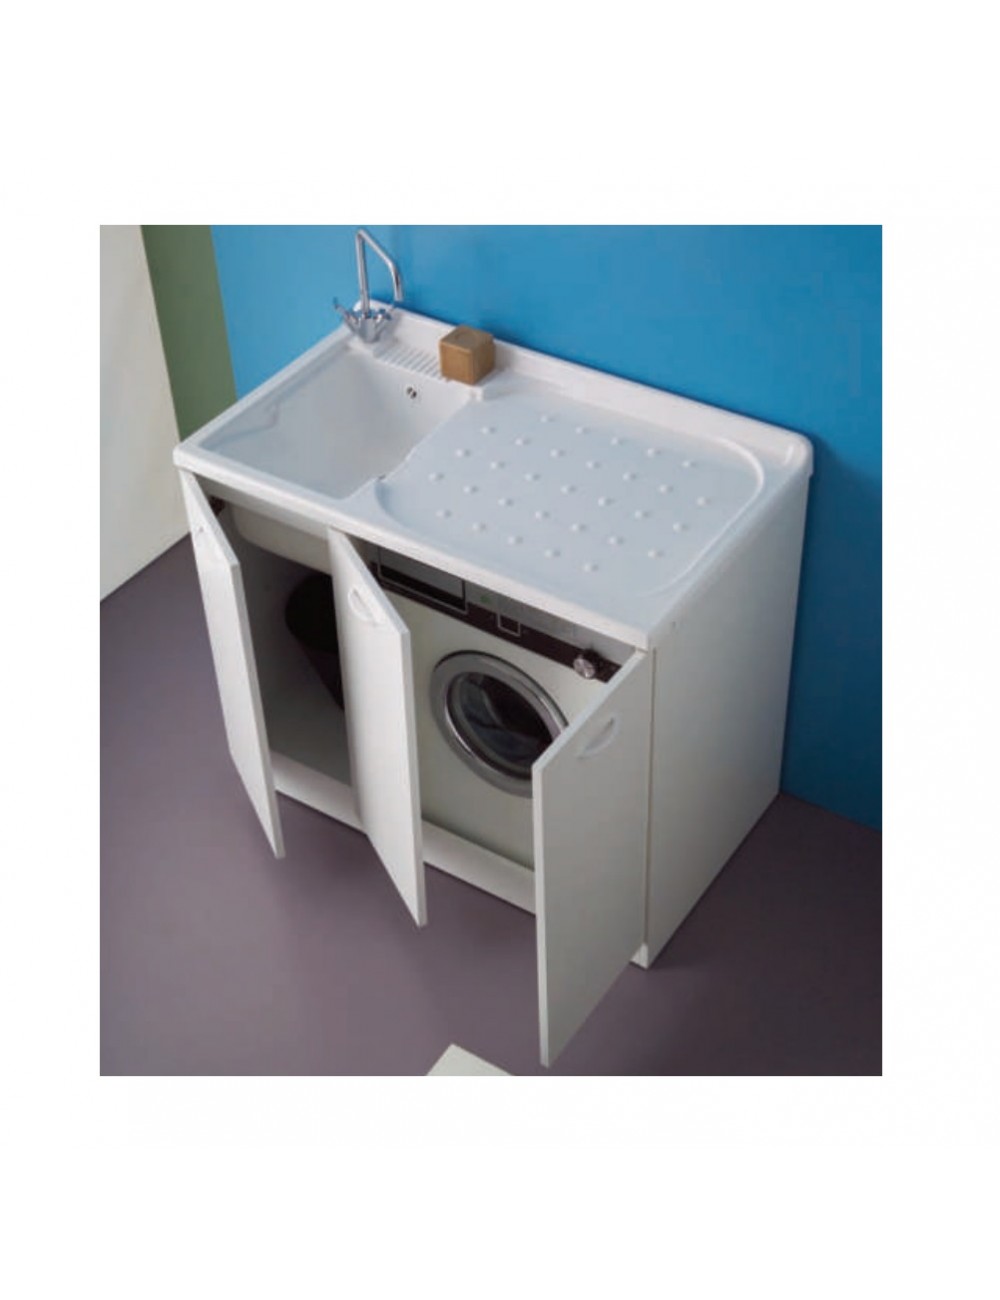 Mobile lavatoio lavanderia cm 124x60 copri lavatrice Lady bianco dx